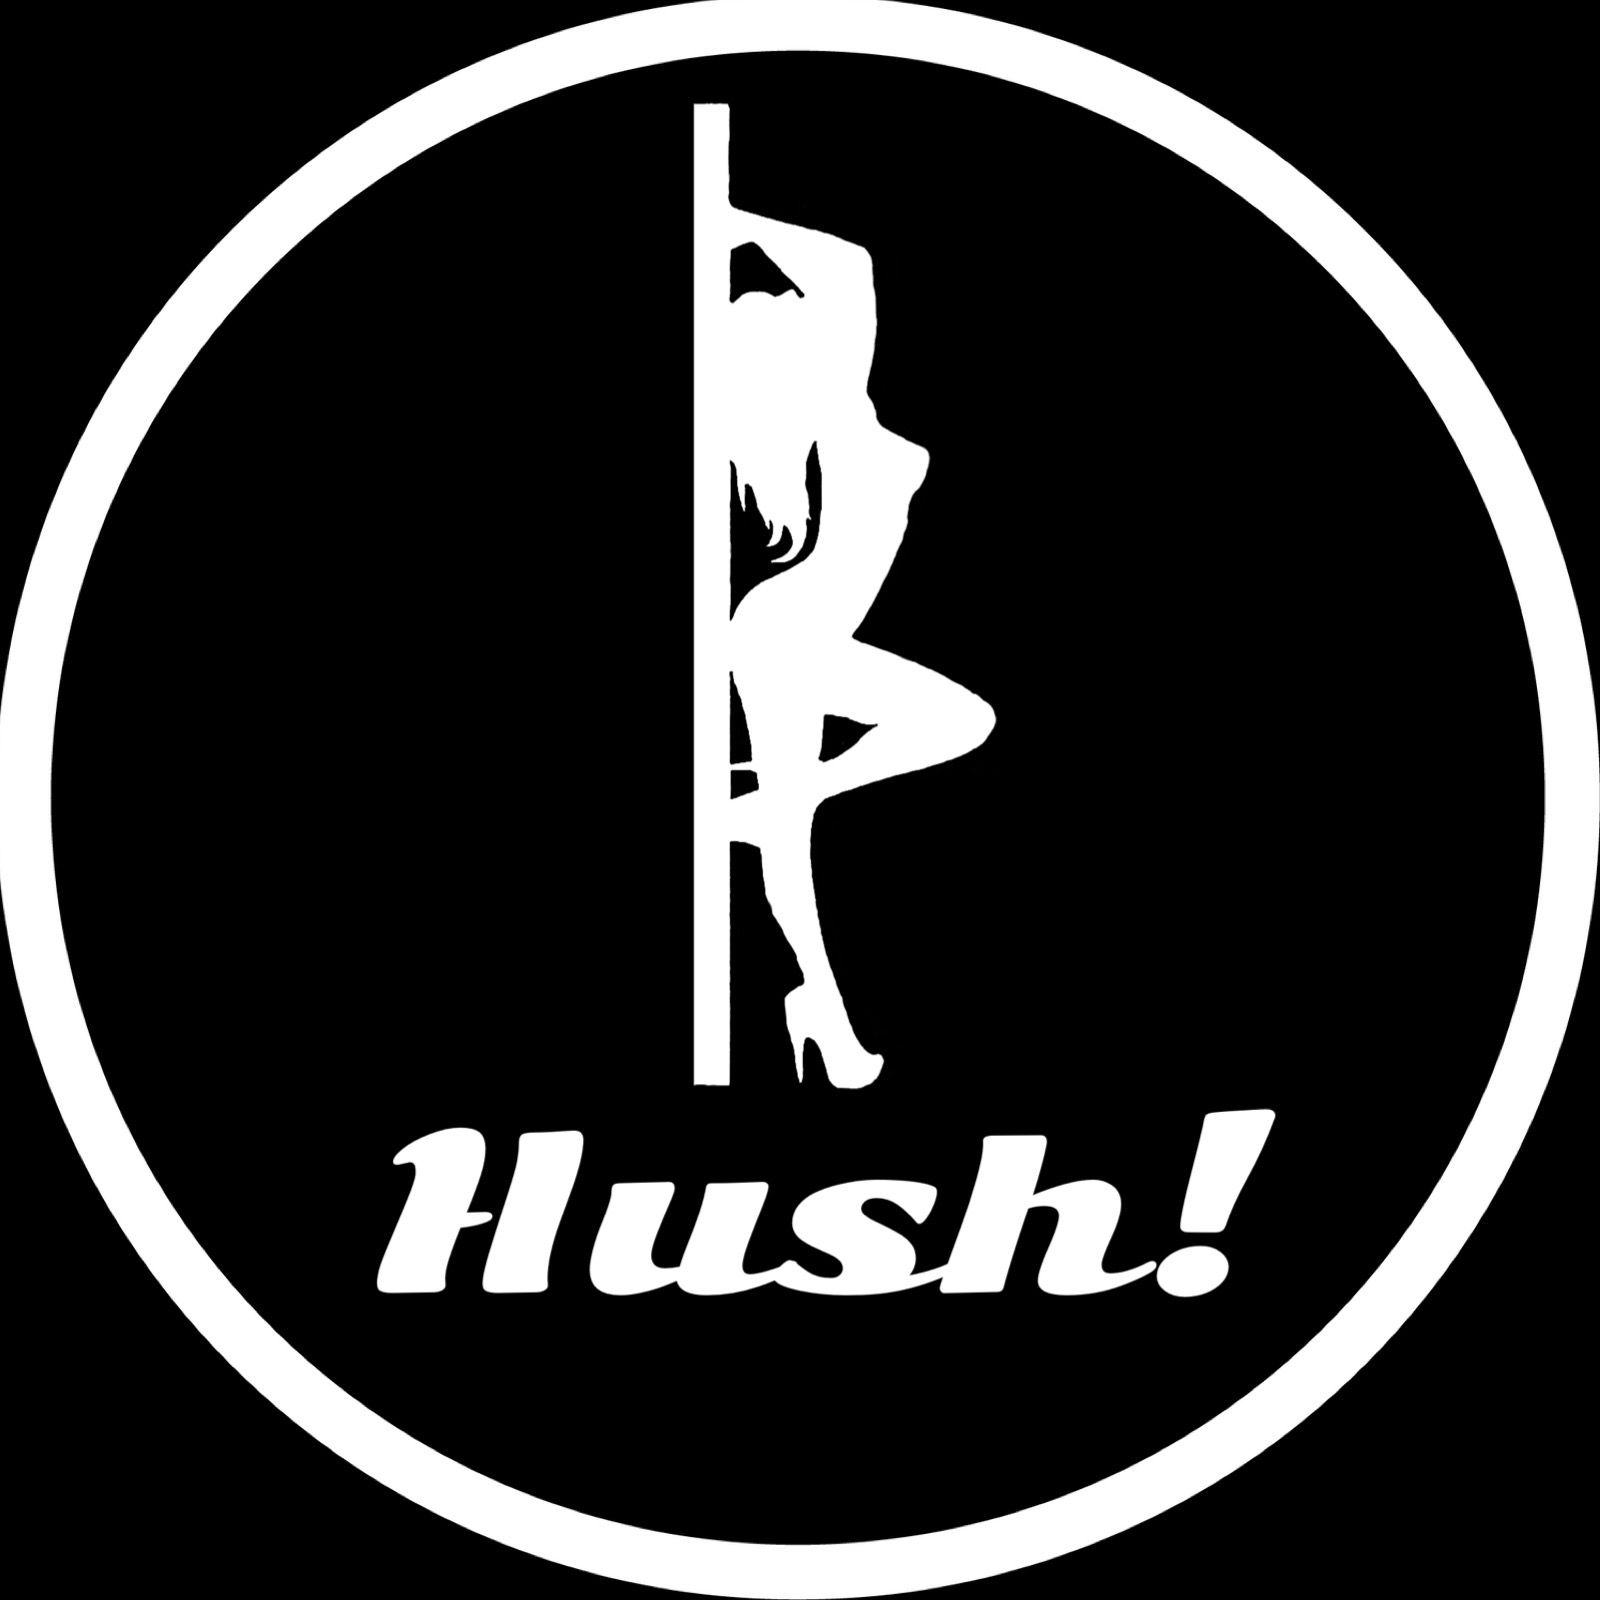 Hush! - Hush! Vol. 54- One on One with Debra Shade